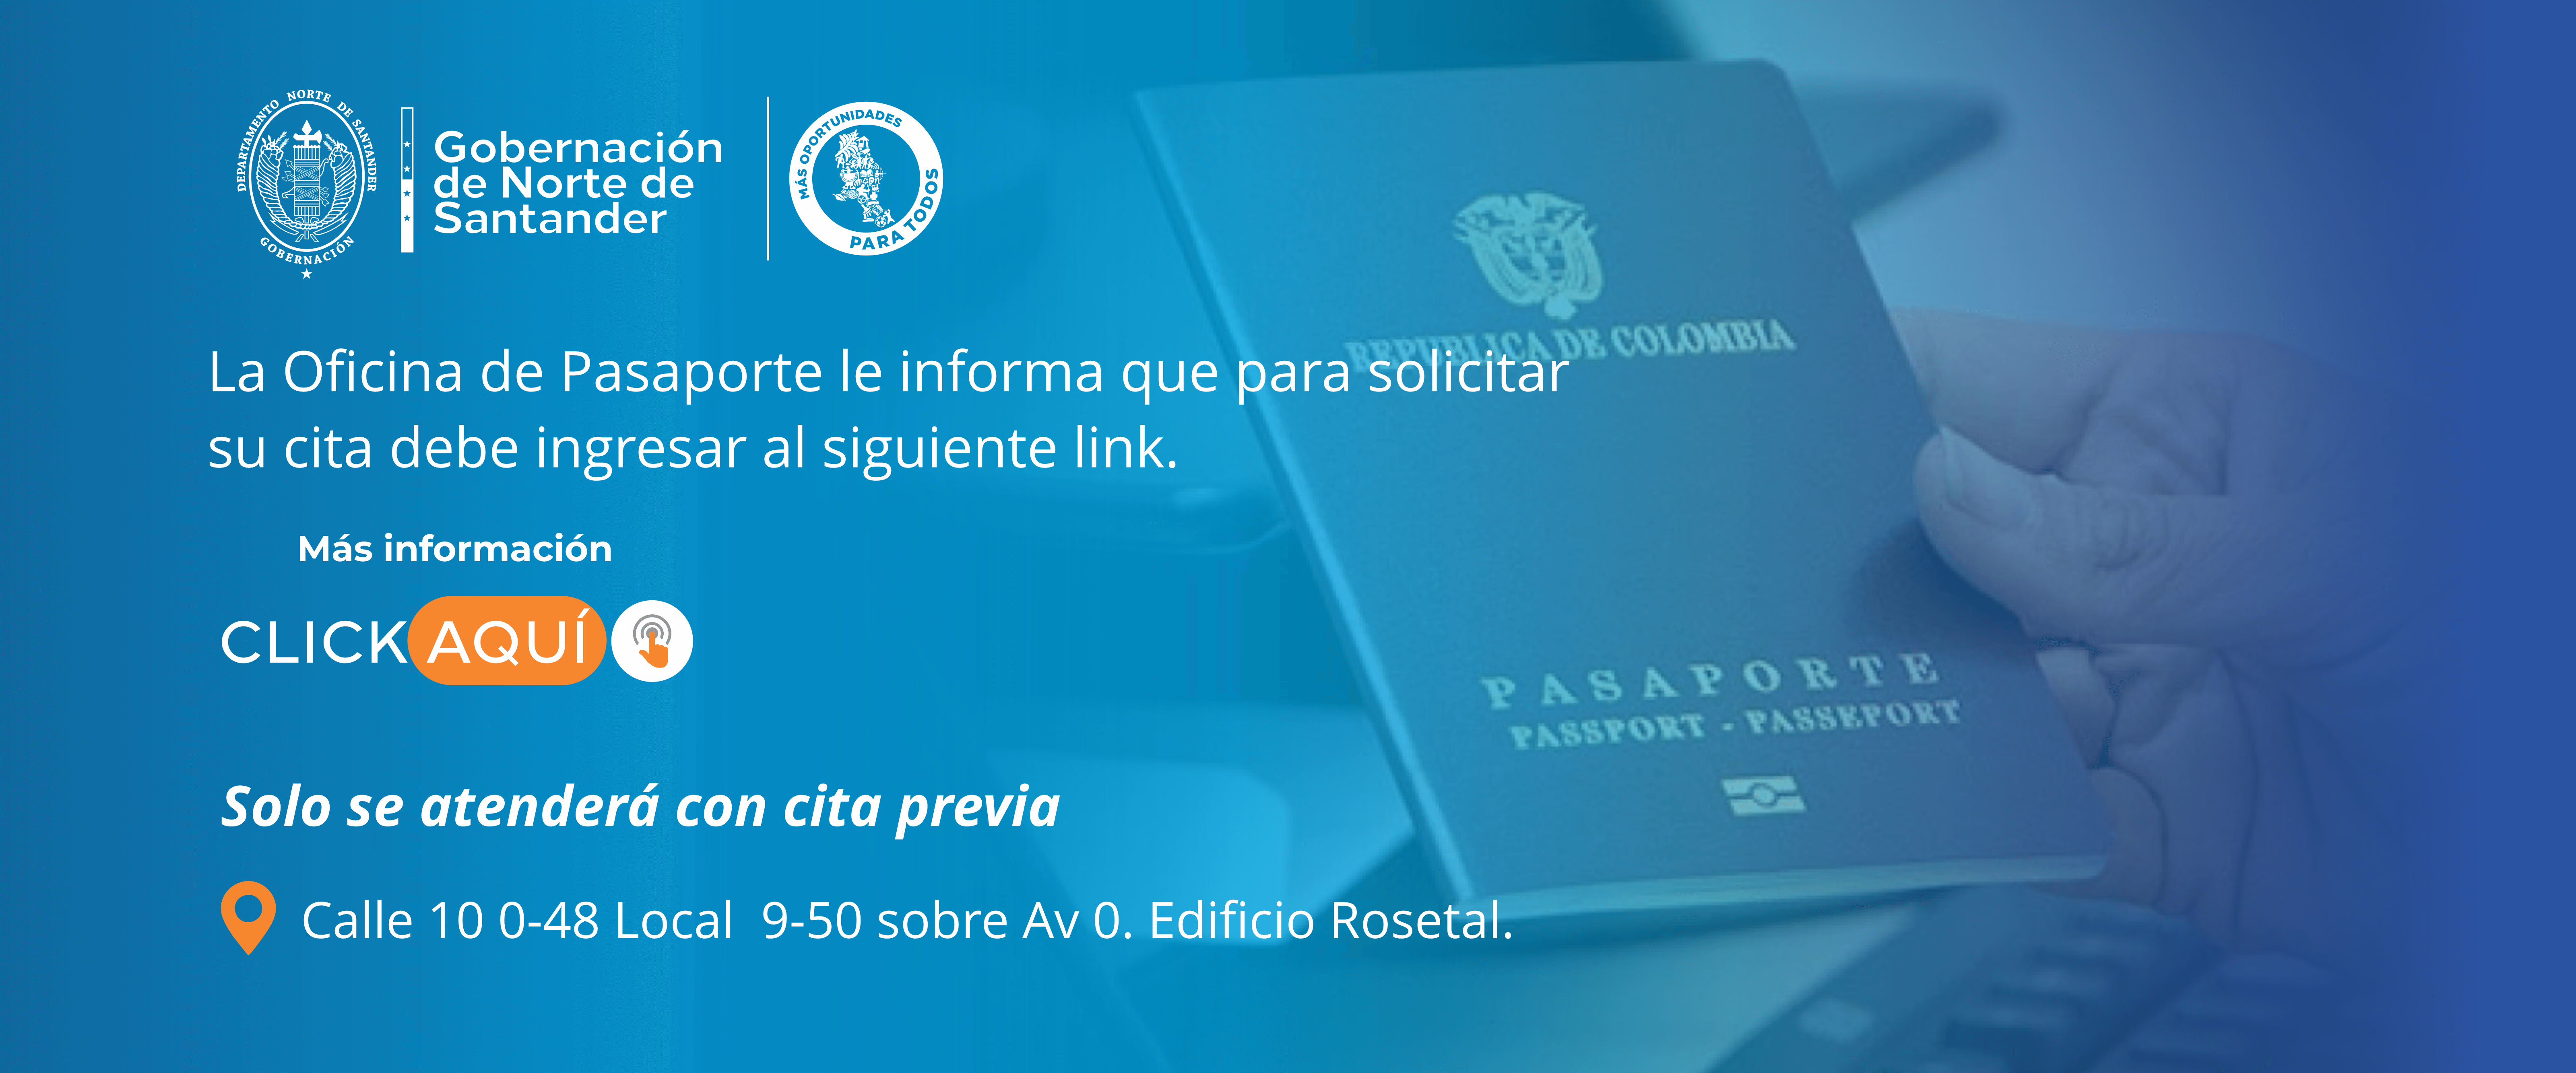 Este enlace abre la pagina para solicitar citas para solicitudes de pasaporte